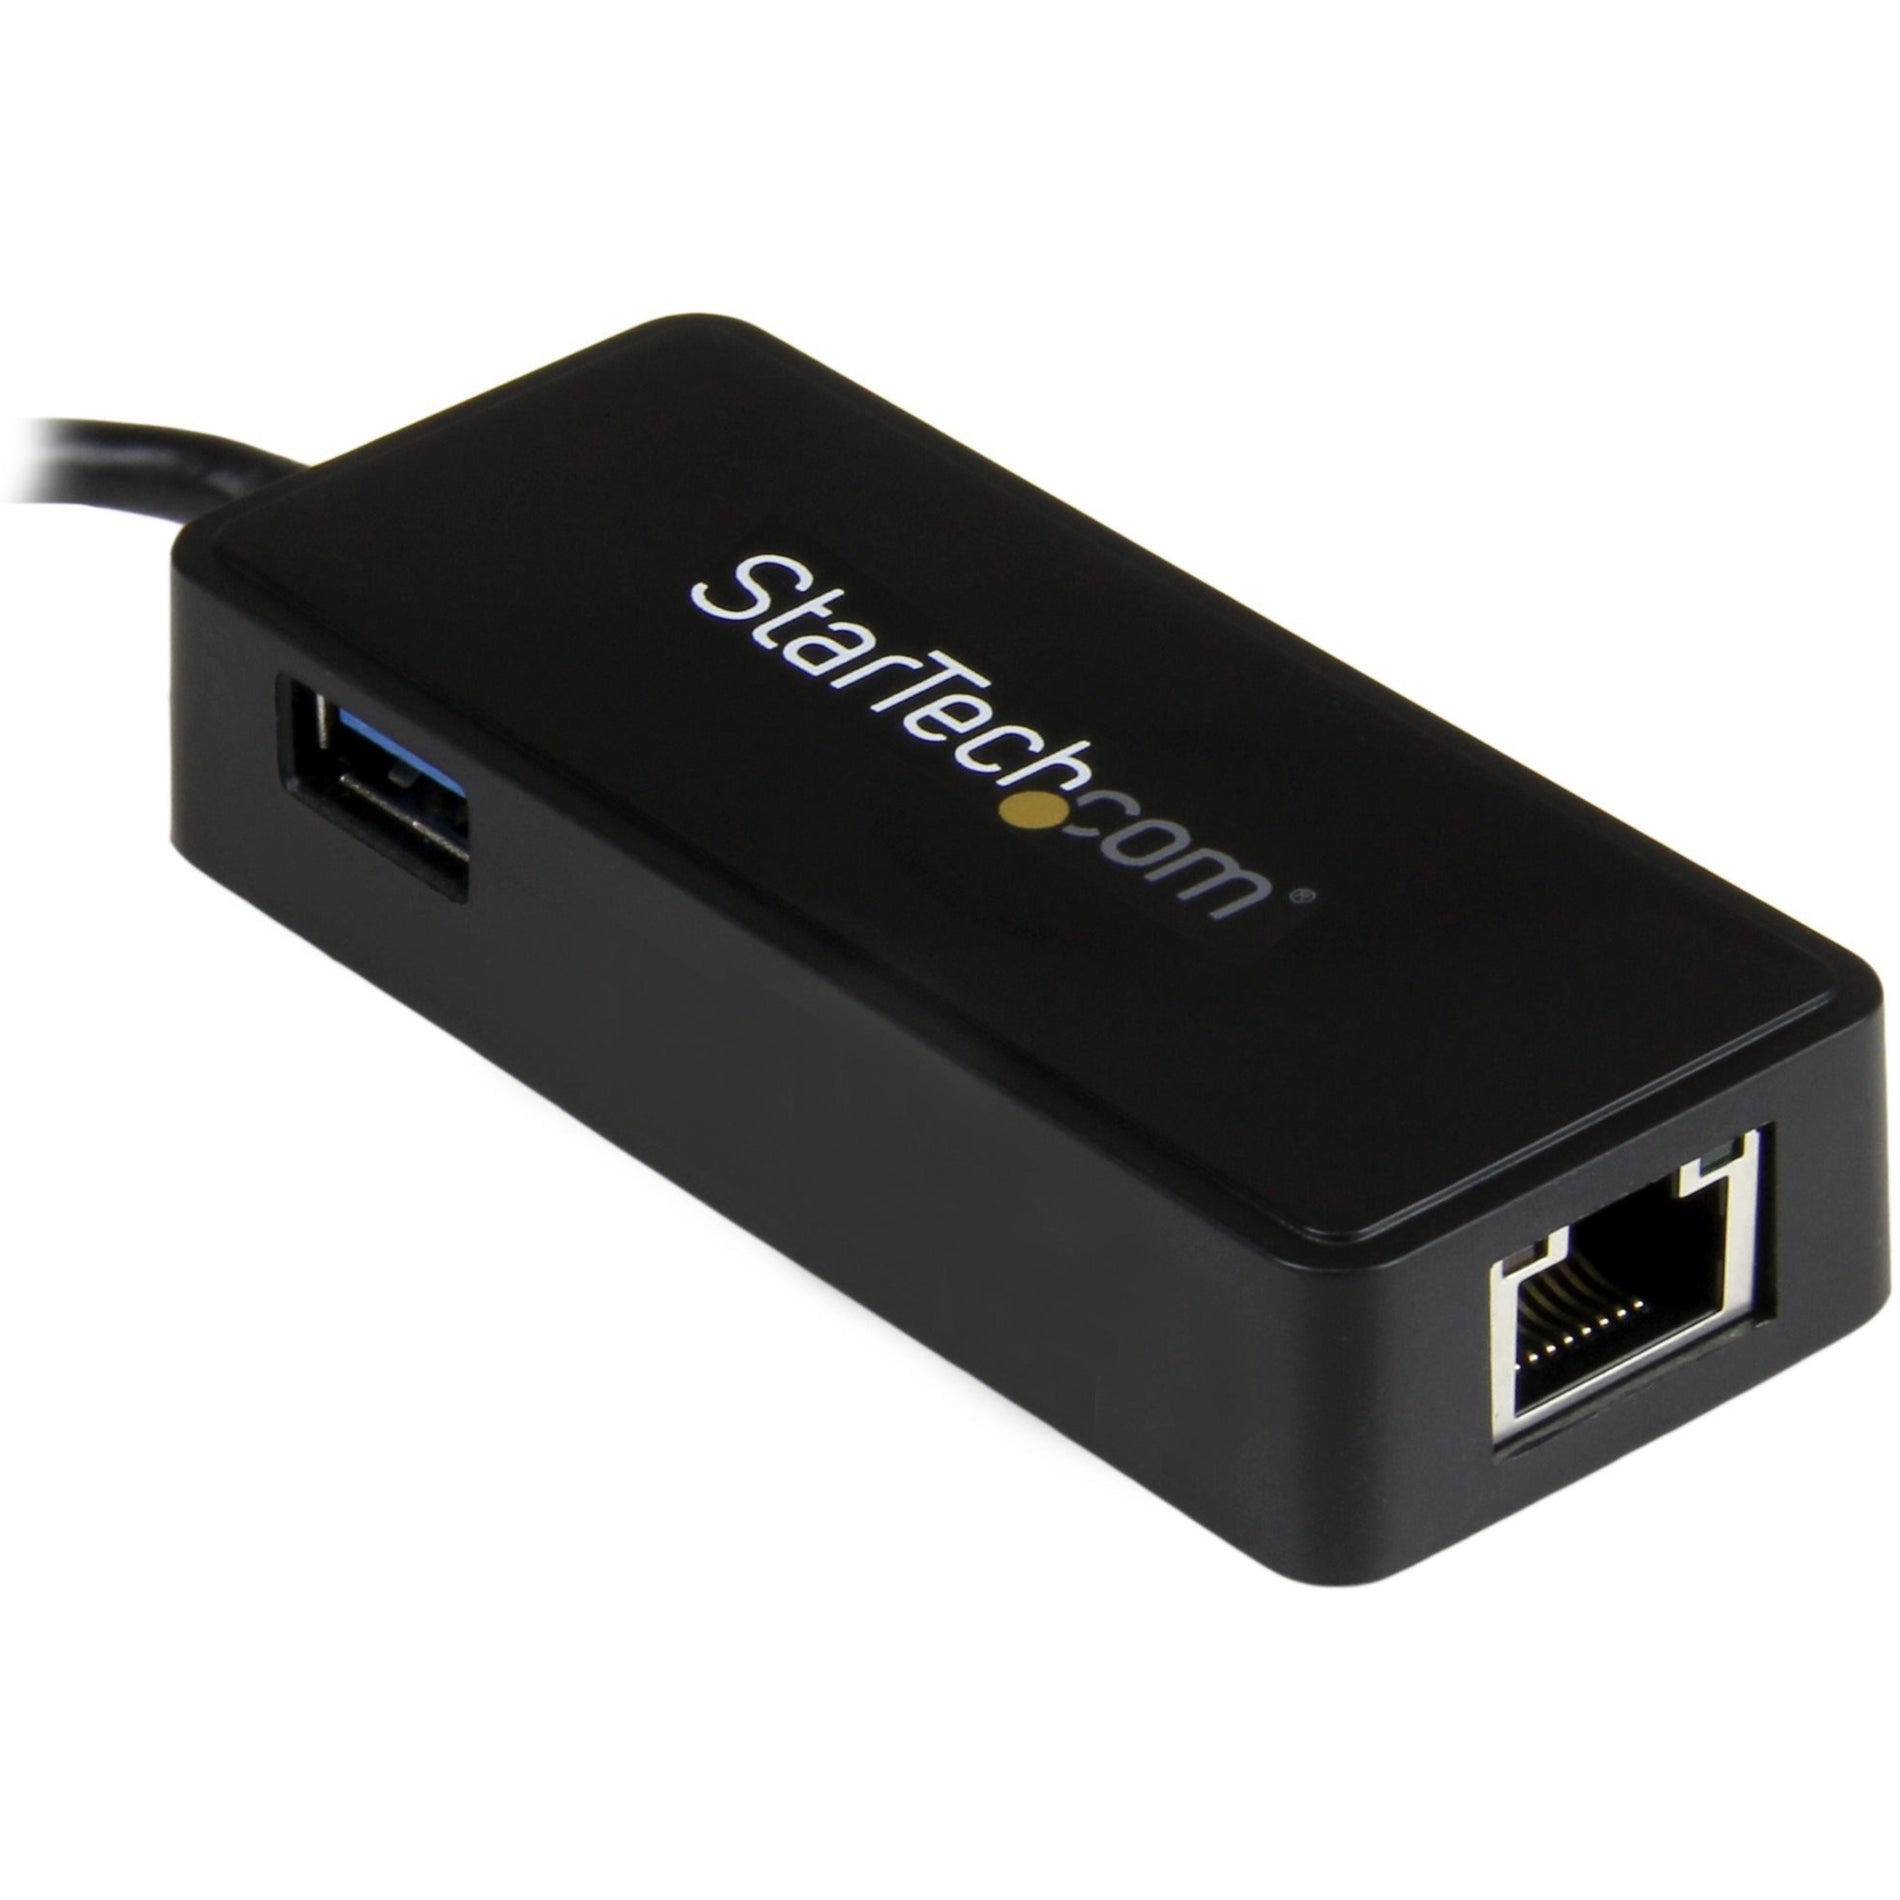 StarTech.com US1GC301AU USB-C to Gigabit Network Adapter with Extra USB 3.0 Port - Black, USB 3.1 Type-C Gen 1 (5 Gbps)